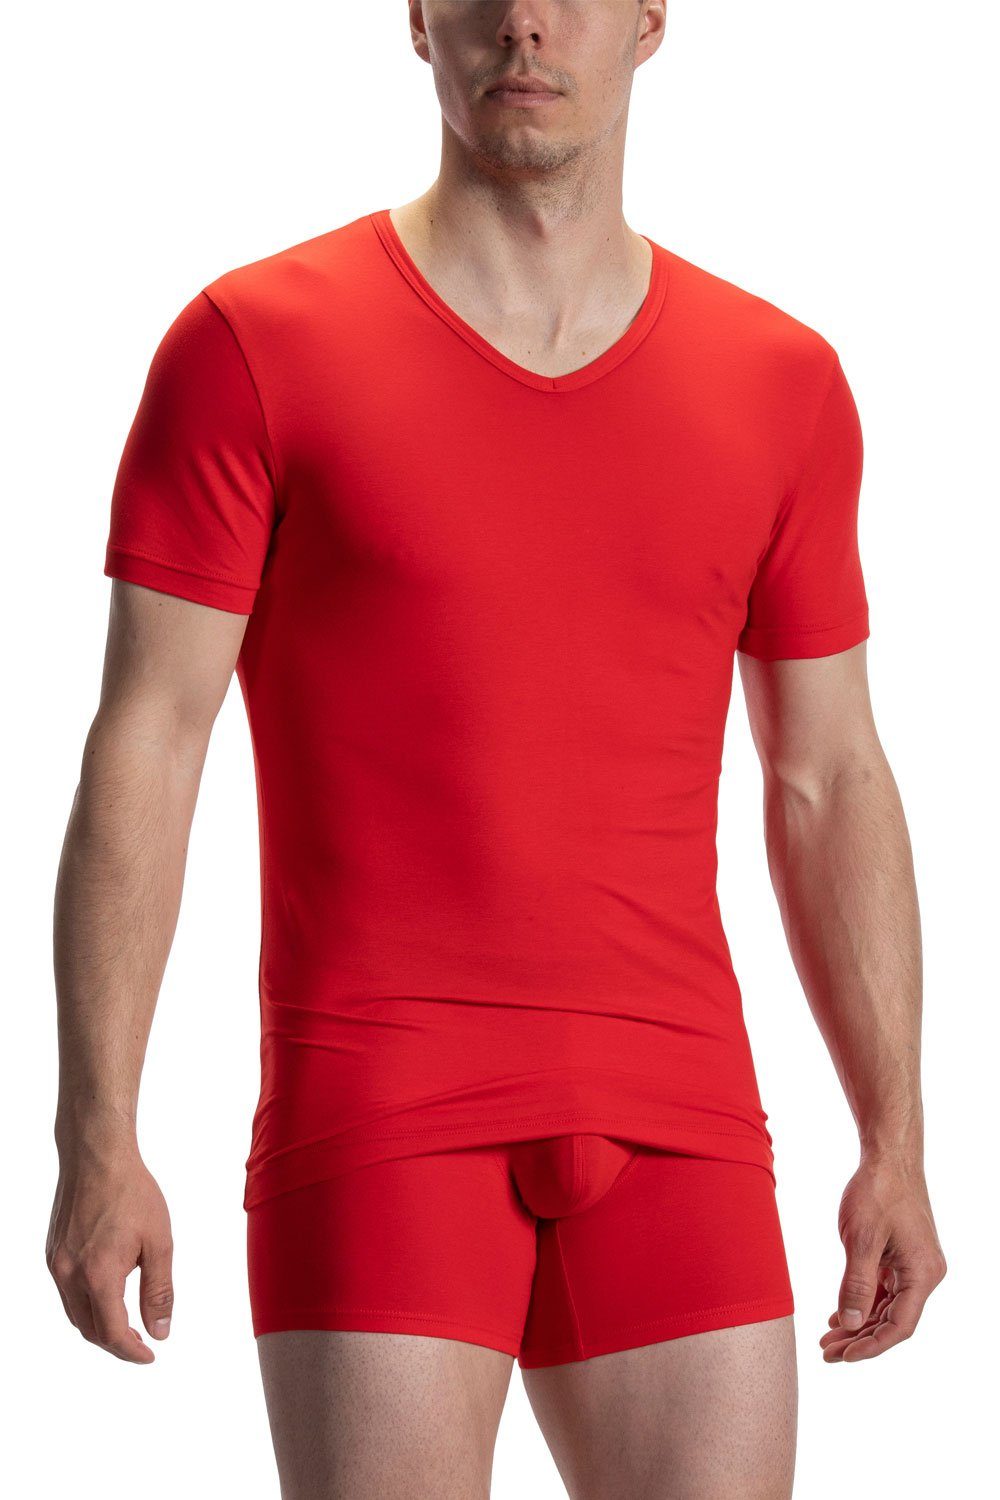 Olaf Benz T-Shirt Shirt V-Neck (Reg) 107418 red